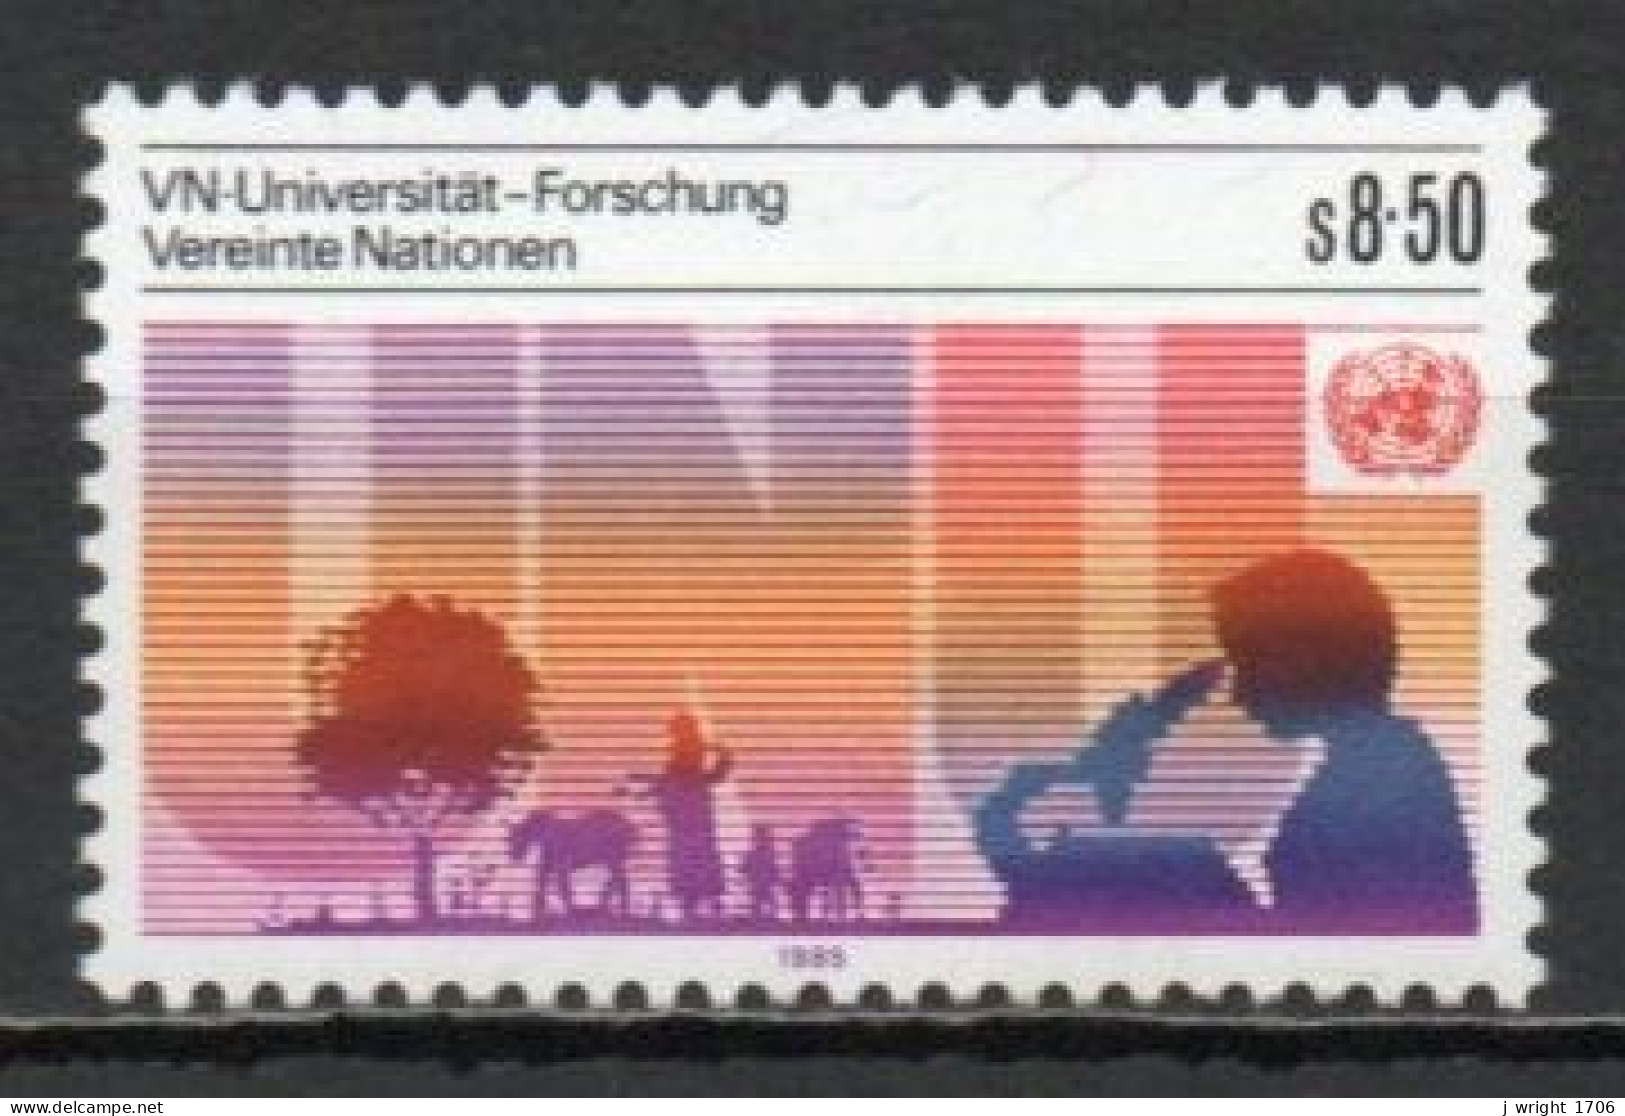 UN/Vienna, 1985, UN University, 8.50S, MNH - Unused Stamps